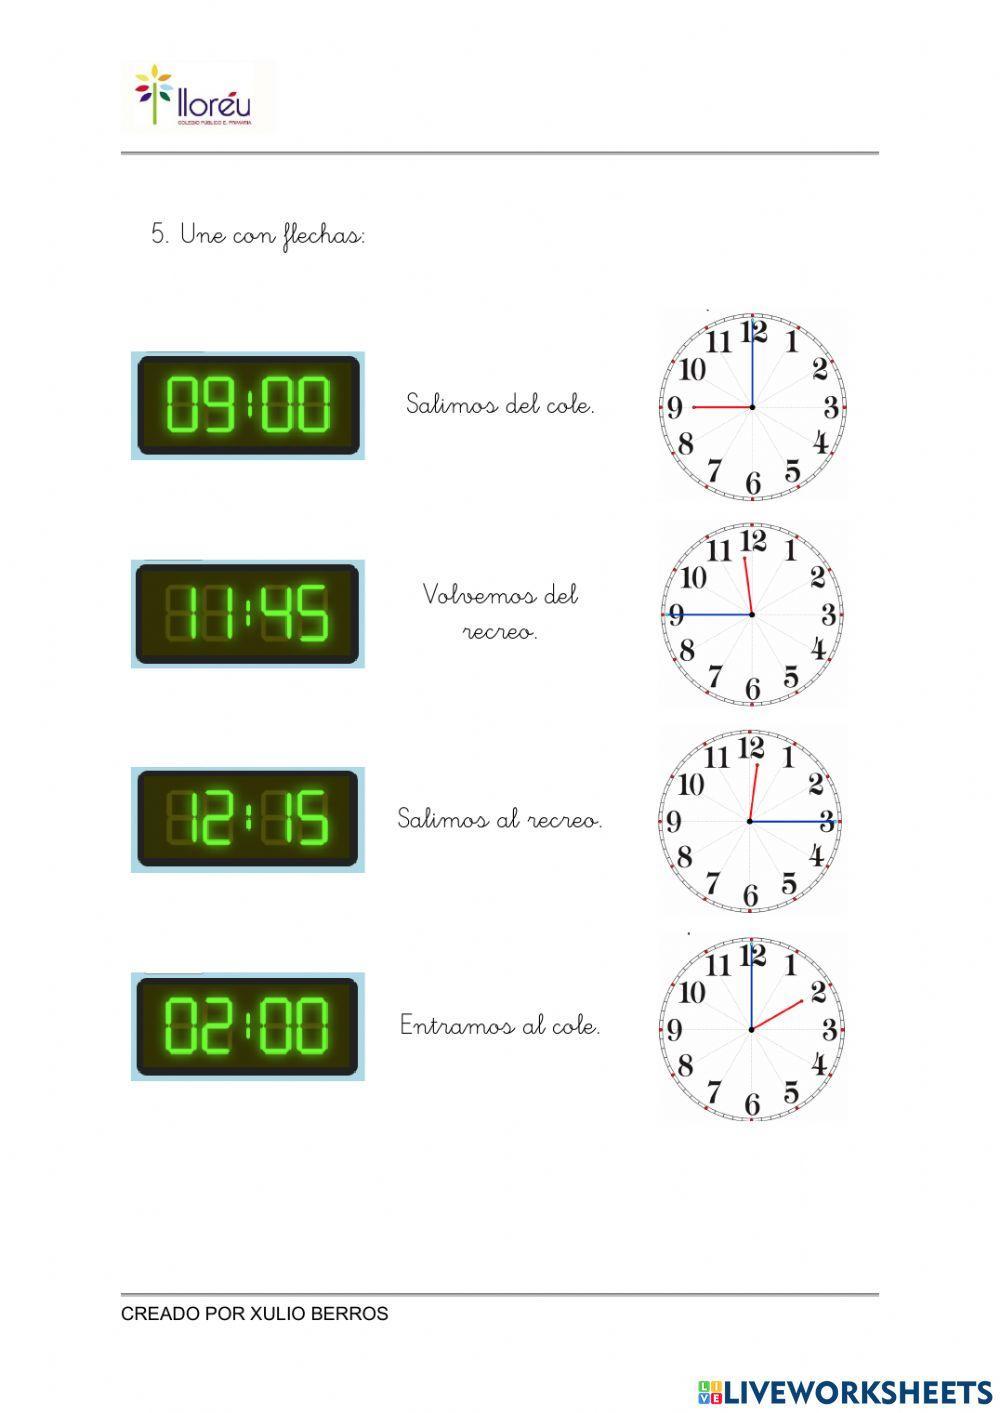 Reloj analógico y reloj digital